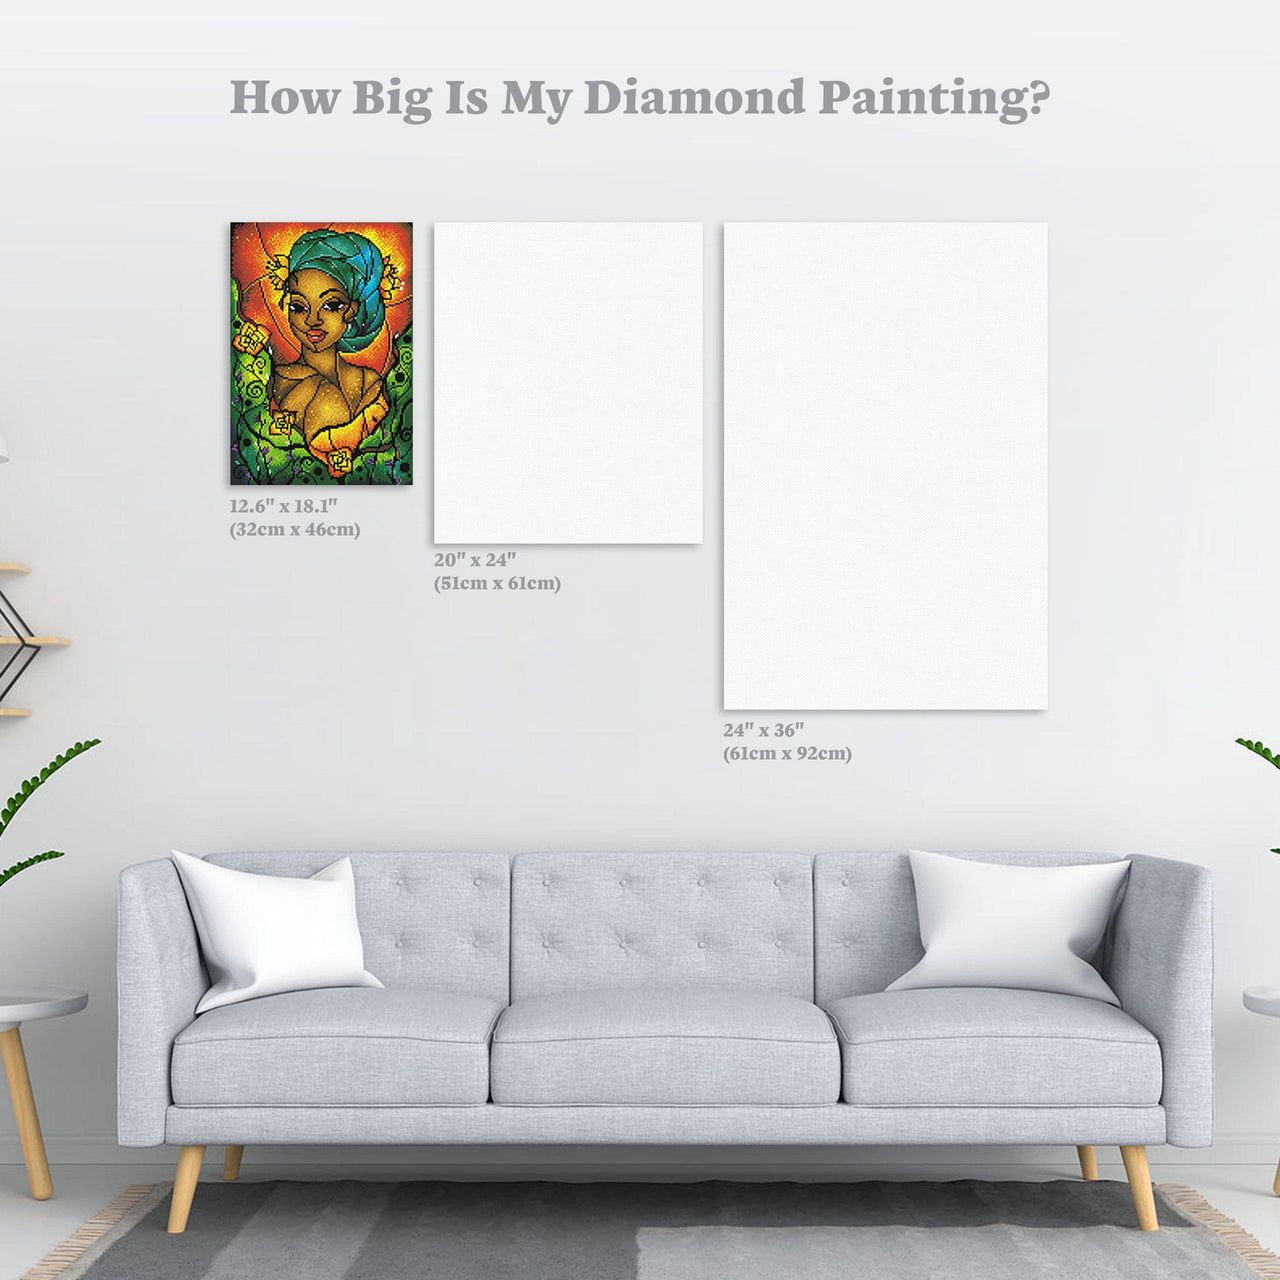 Diamond Painting Lady Creole 12.6" x 18.1" (32cm x 46cm) / Round With 34 Colors including 2 AB Diamonds / 18,420